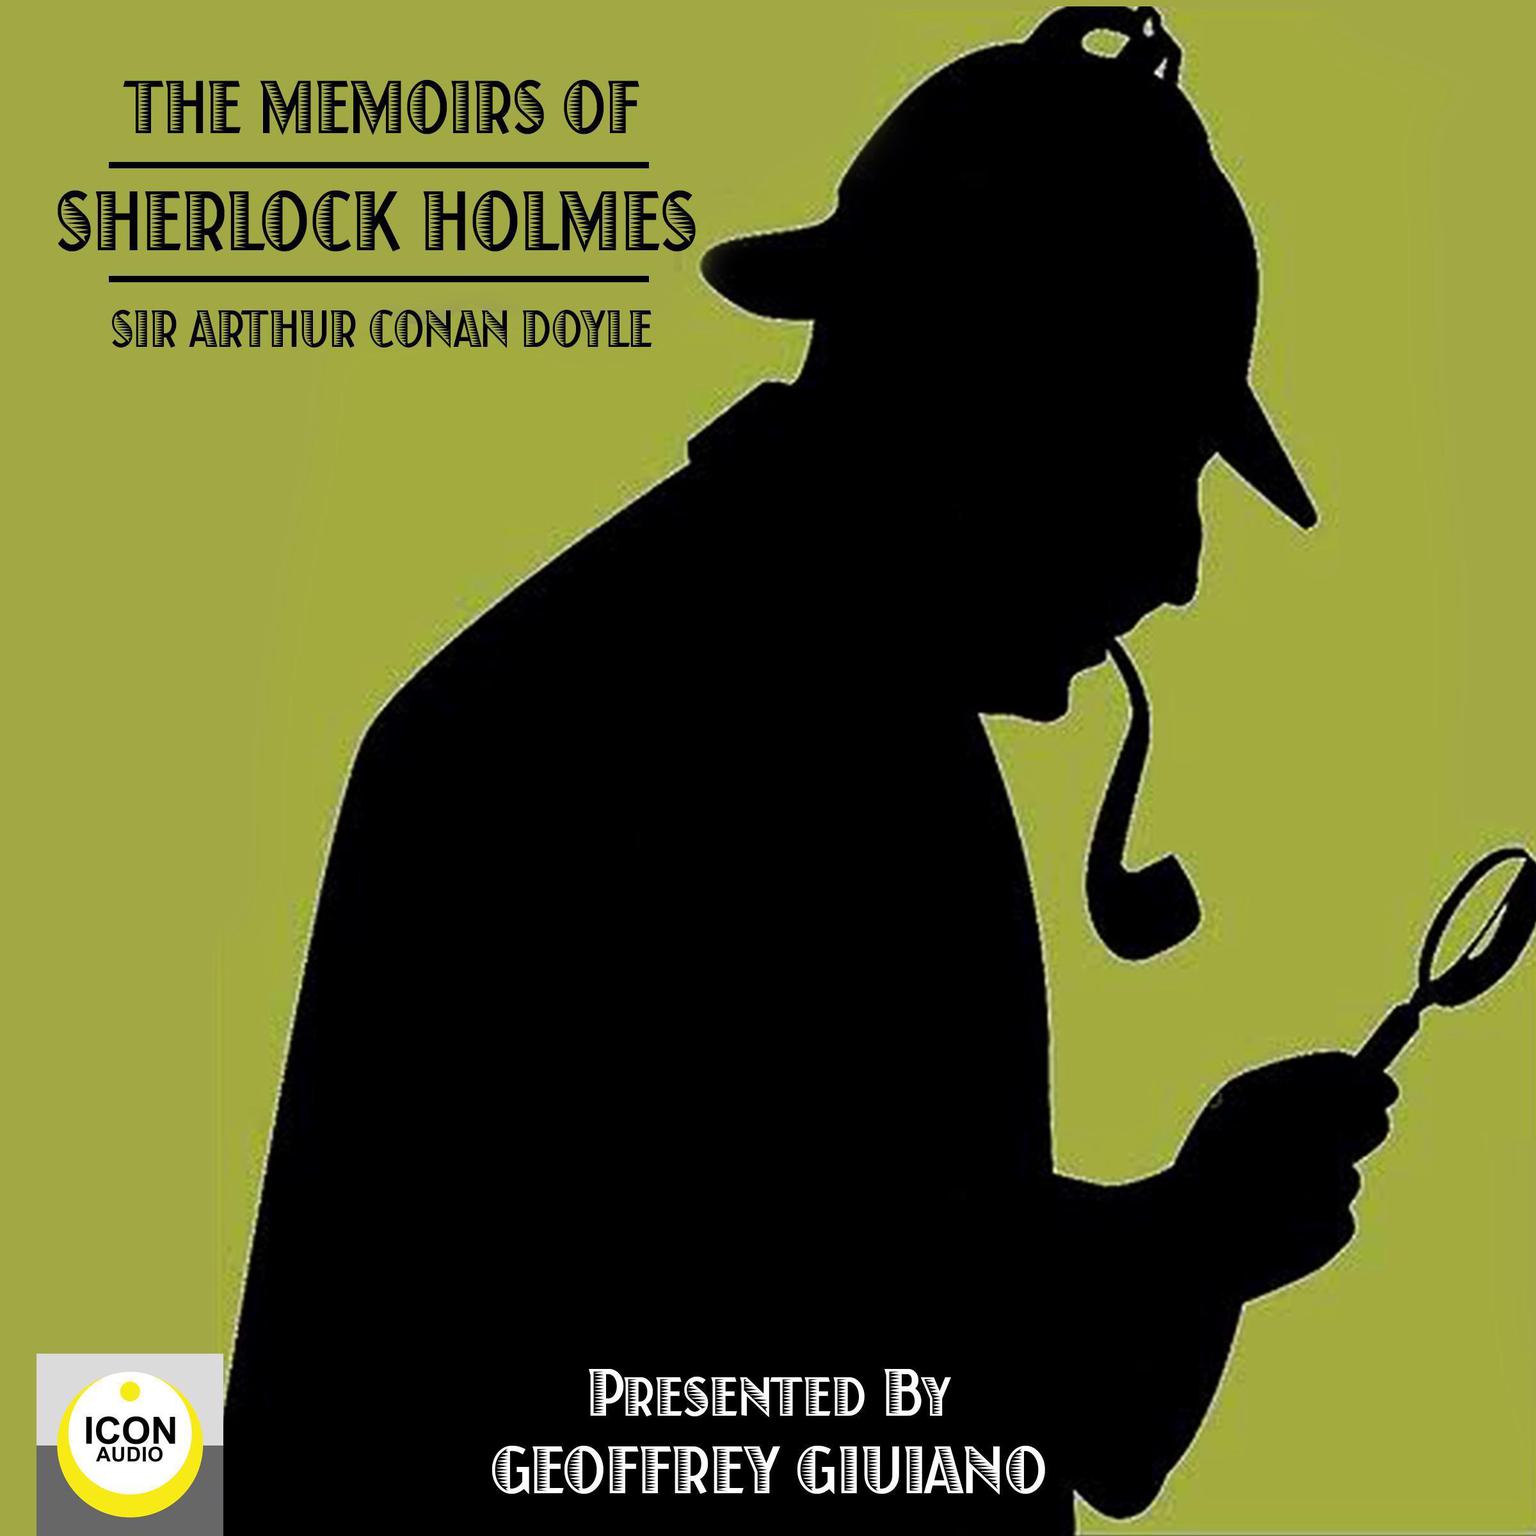 The Memoirs of Sherlock Holmes Audiobook, by Arthur Conan Doyle